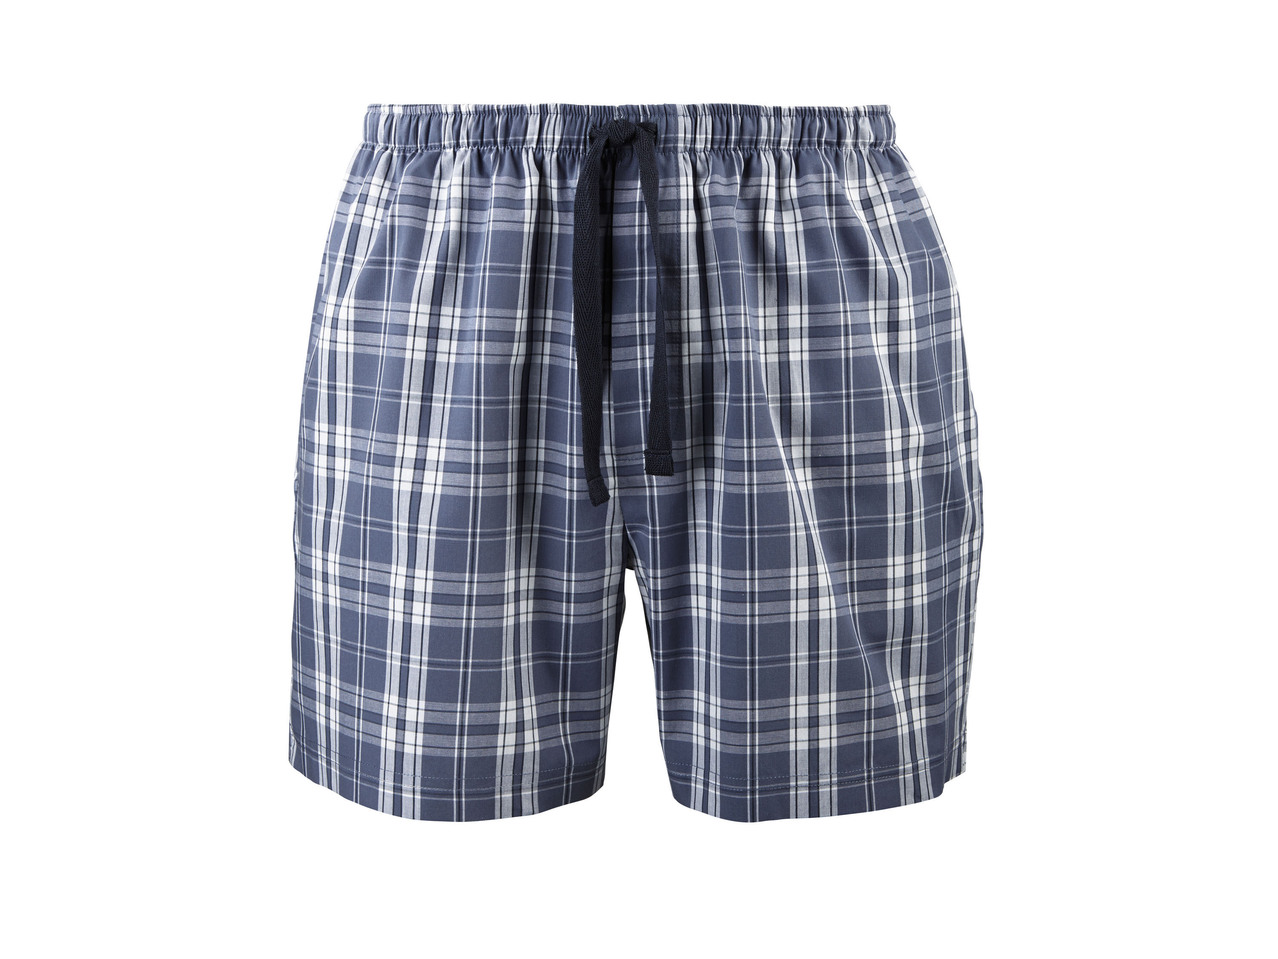 Men's Pyjama Shorts Set